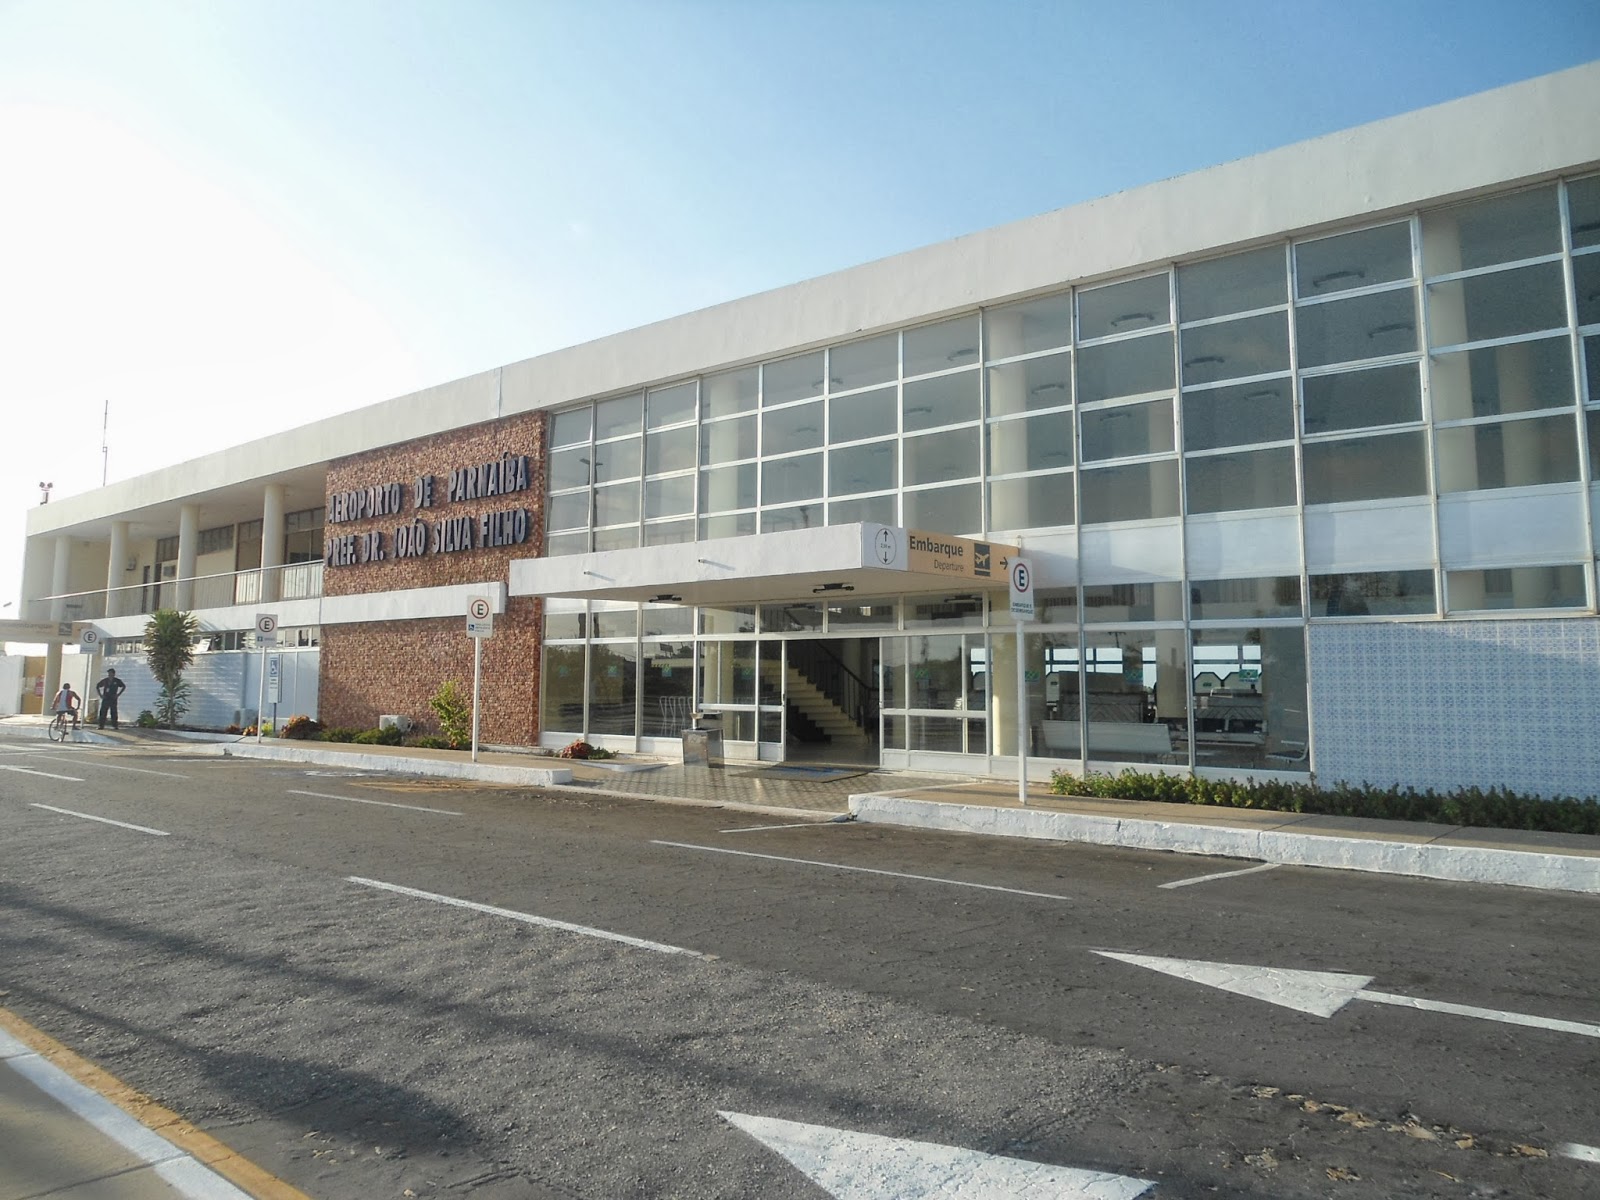 Aeroporto Internacional de Parnaíba, Prefeito Dr João Silva Filho.